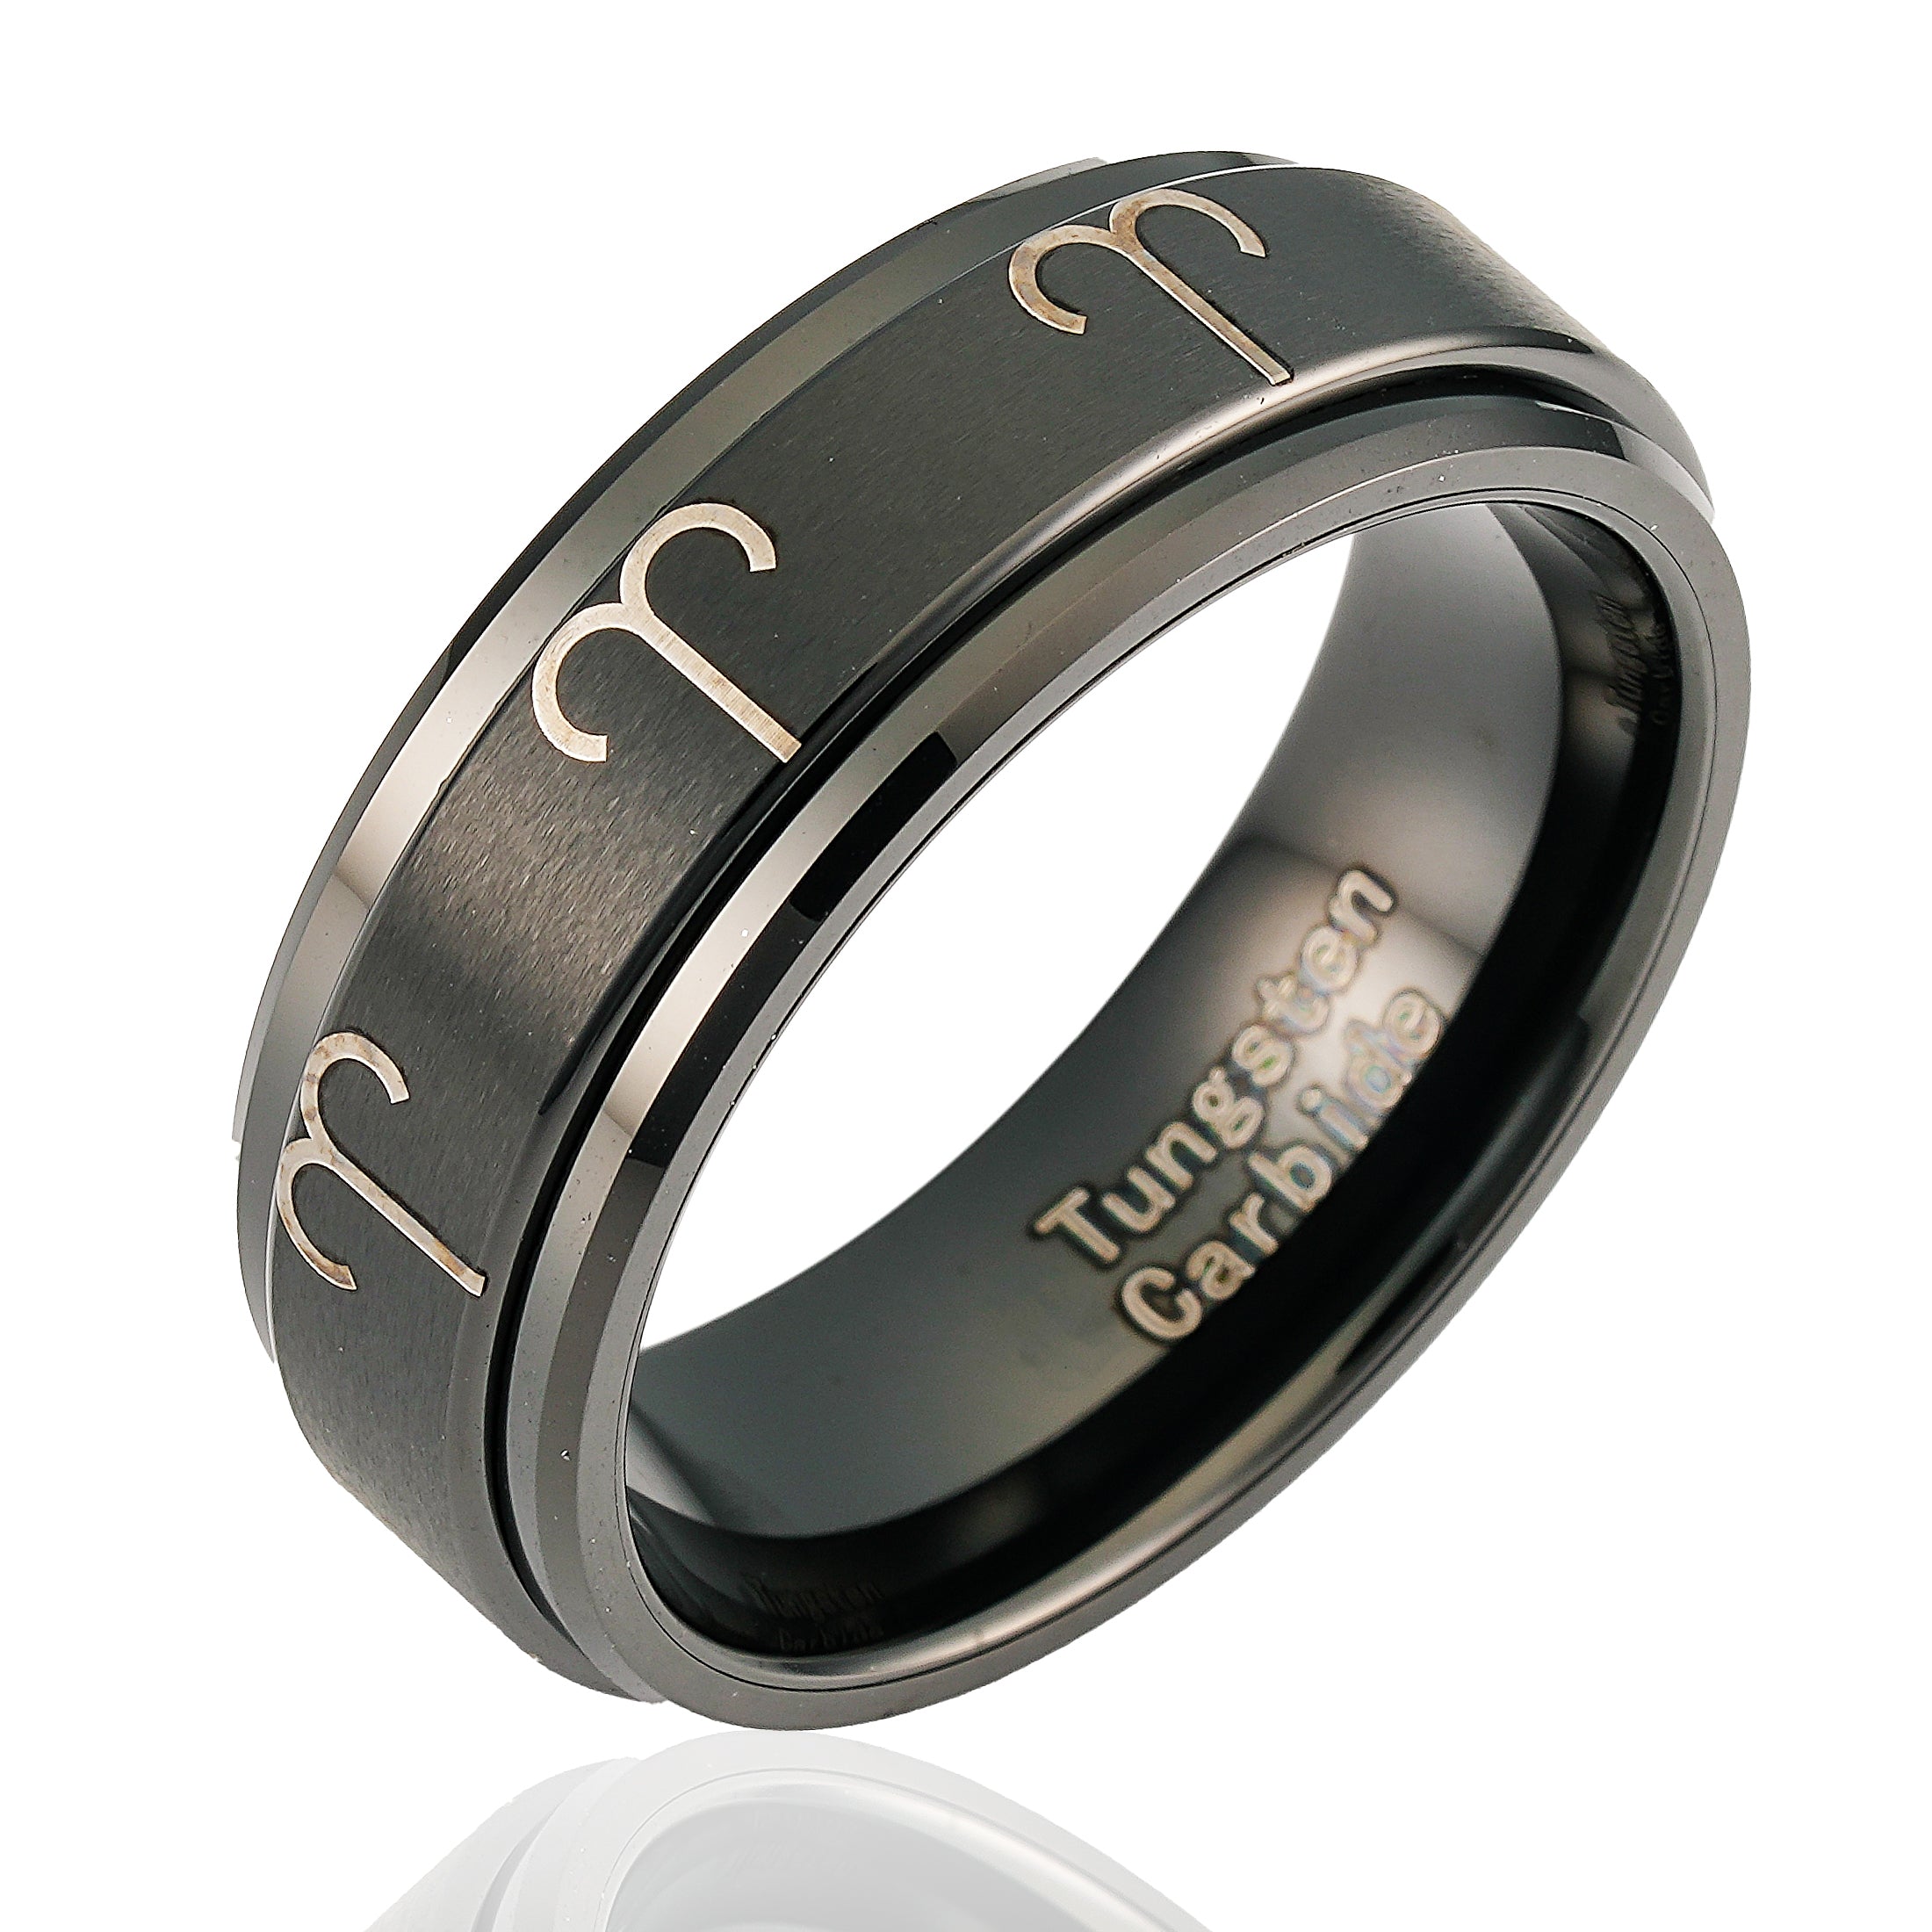 Black Wedding Tungsten Ring D20 Dice Ring Black Tungsten Ring